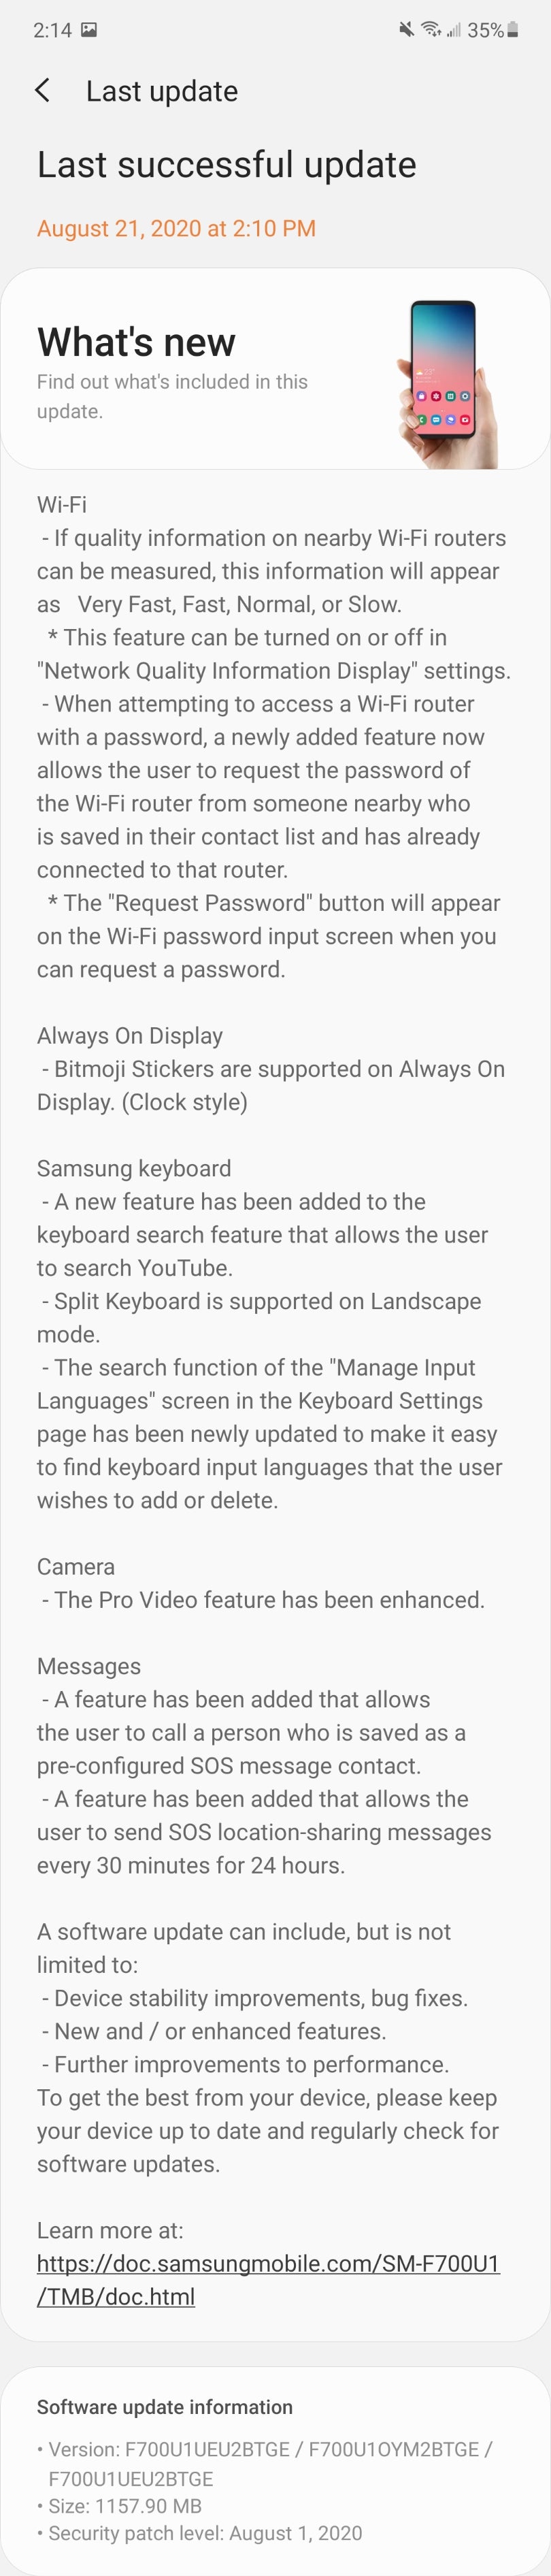 Galaxy Z Flip One UI 2.5 update